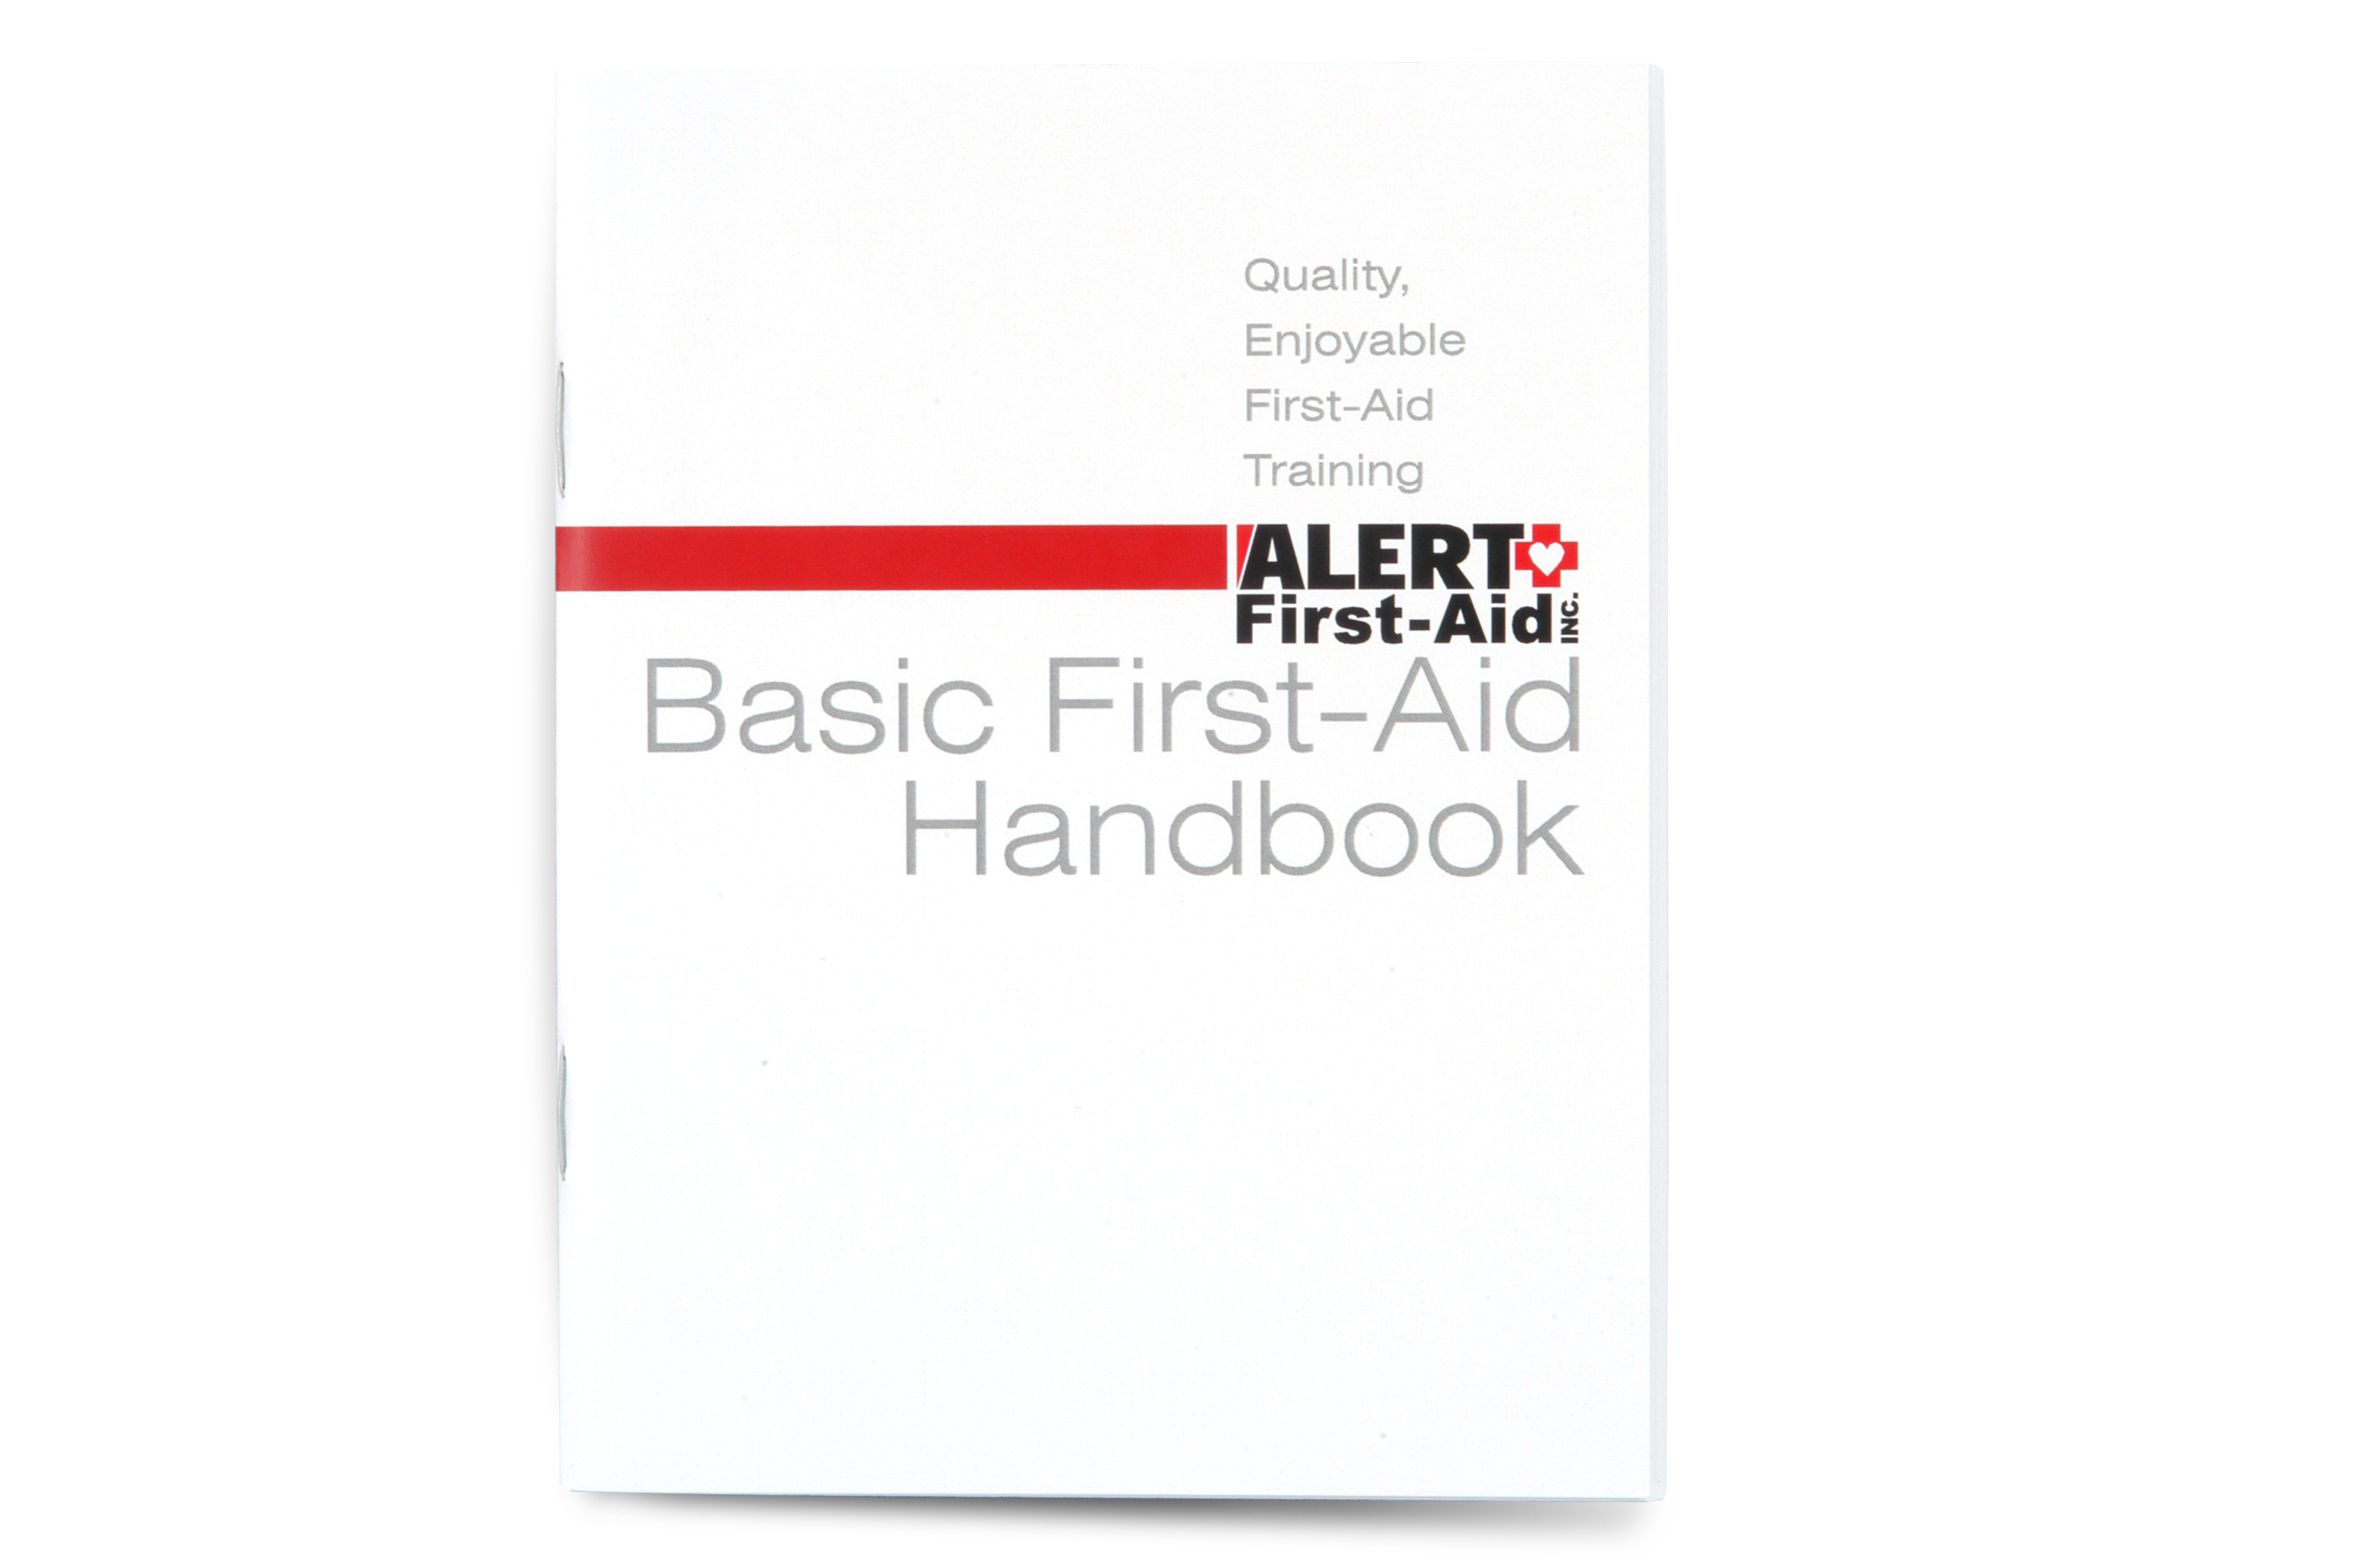 Basic First-Aid Handbook image